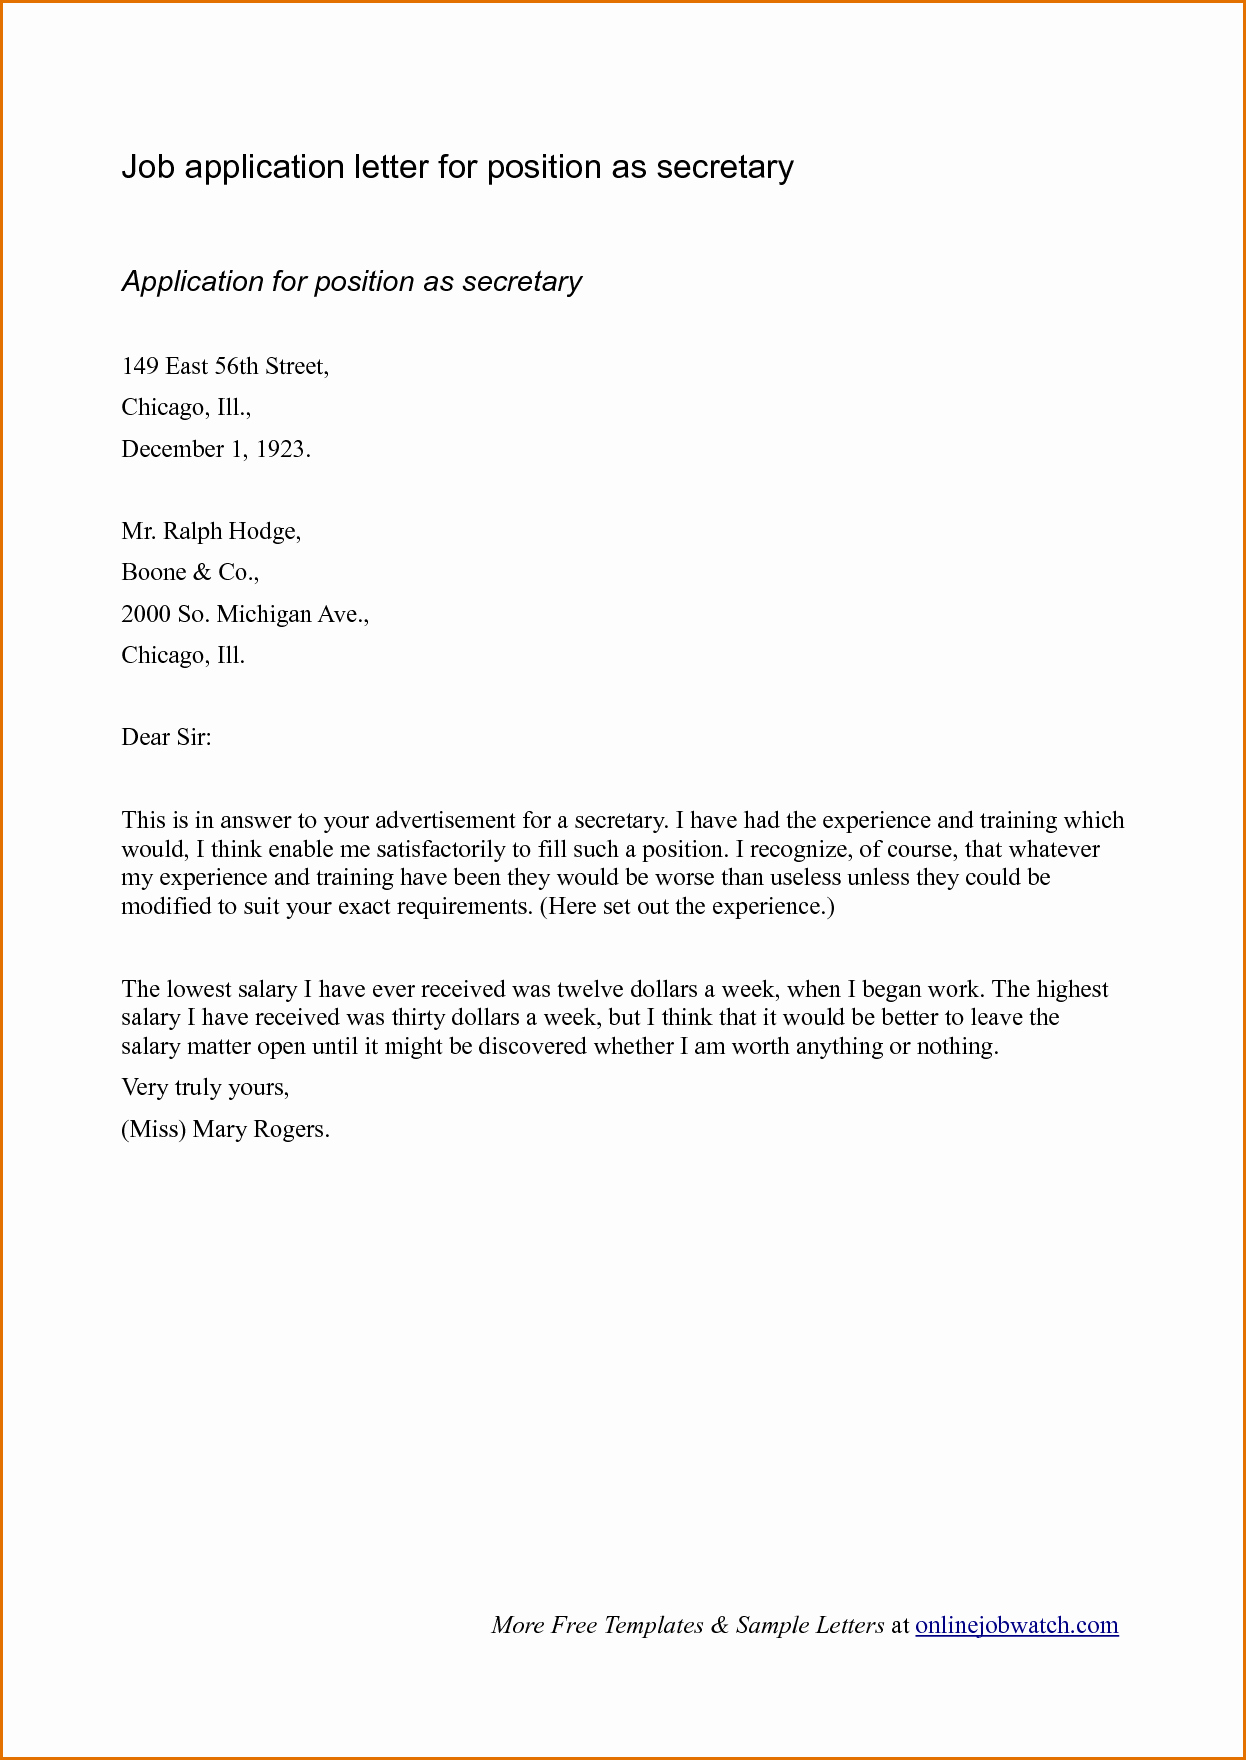 Sample Cover Letter format for Job Application